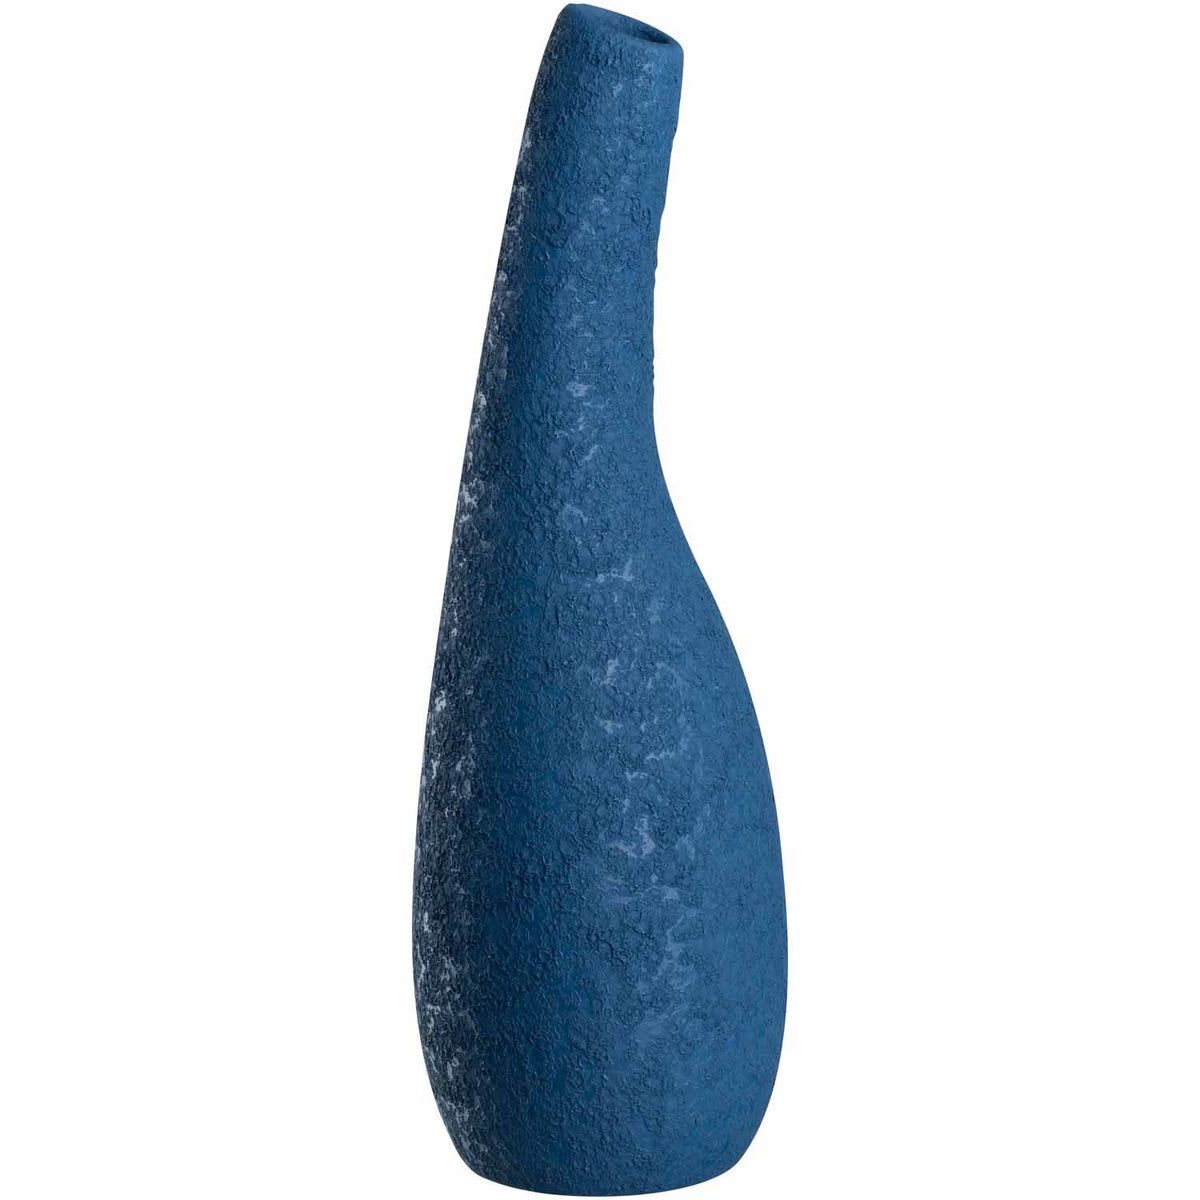 Keramikvase 40cm blau SALERNO